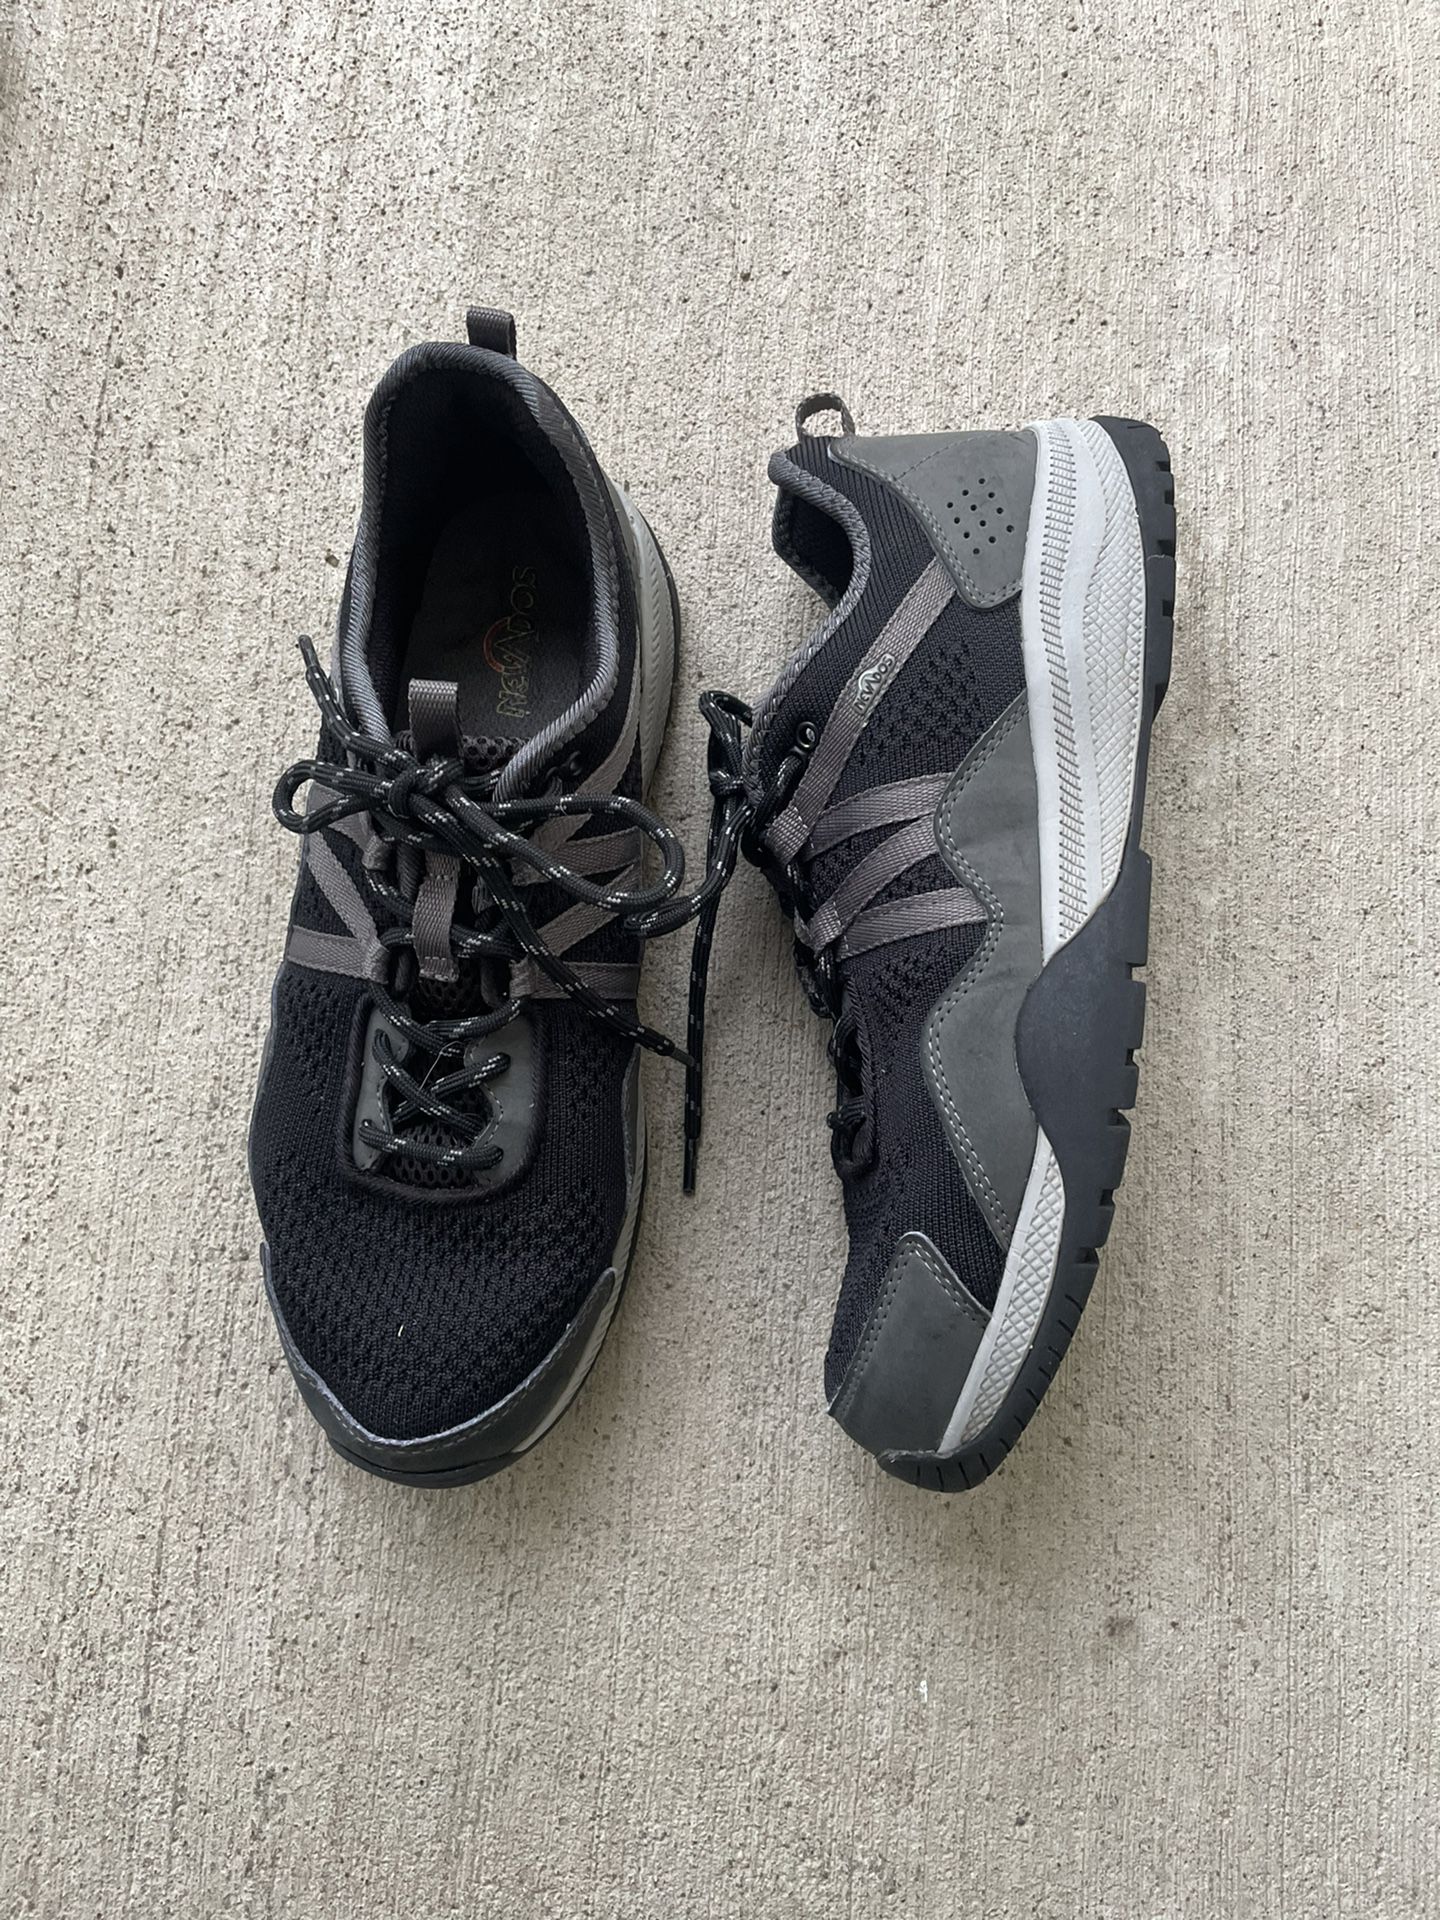 Nevados Men's Brandon Sneakers Hiking Trail Shoes Hiking Boot Black/Grey size 9M